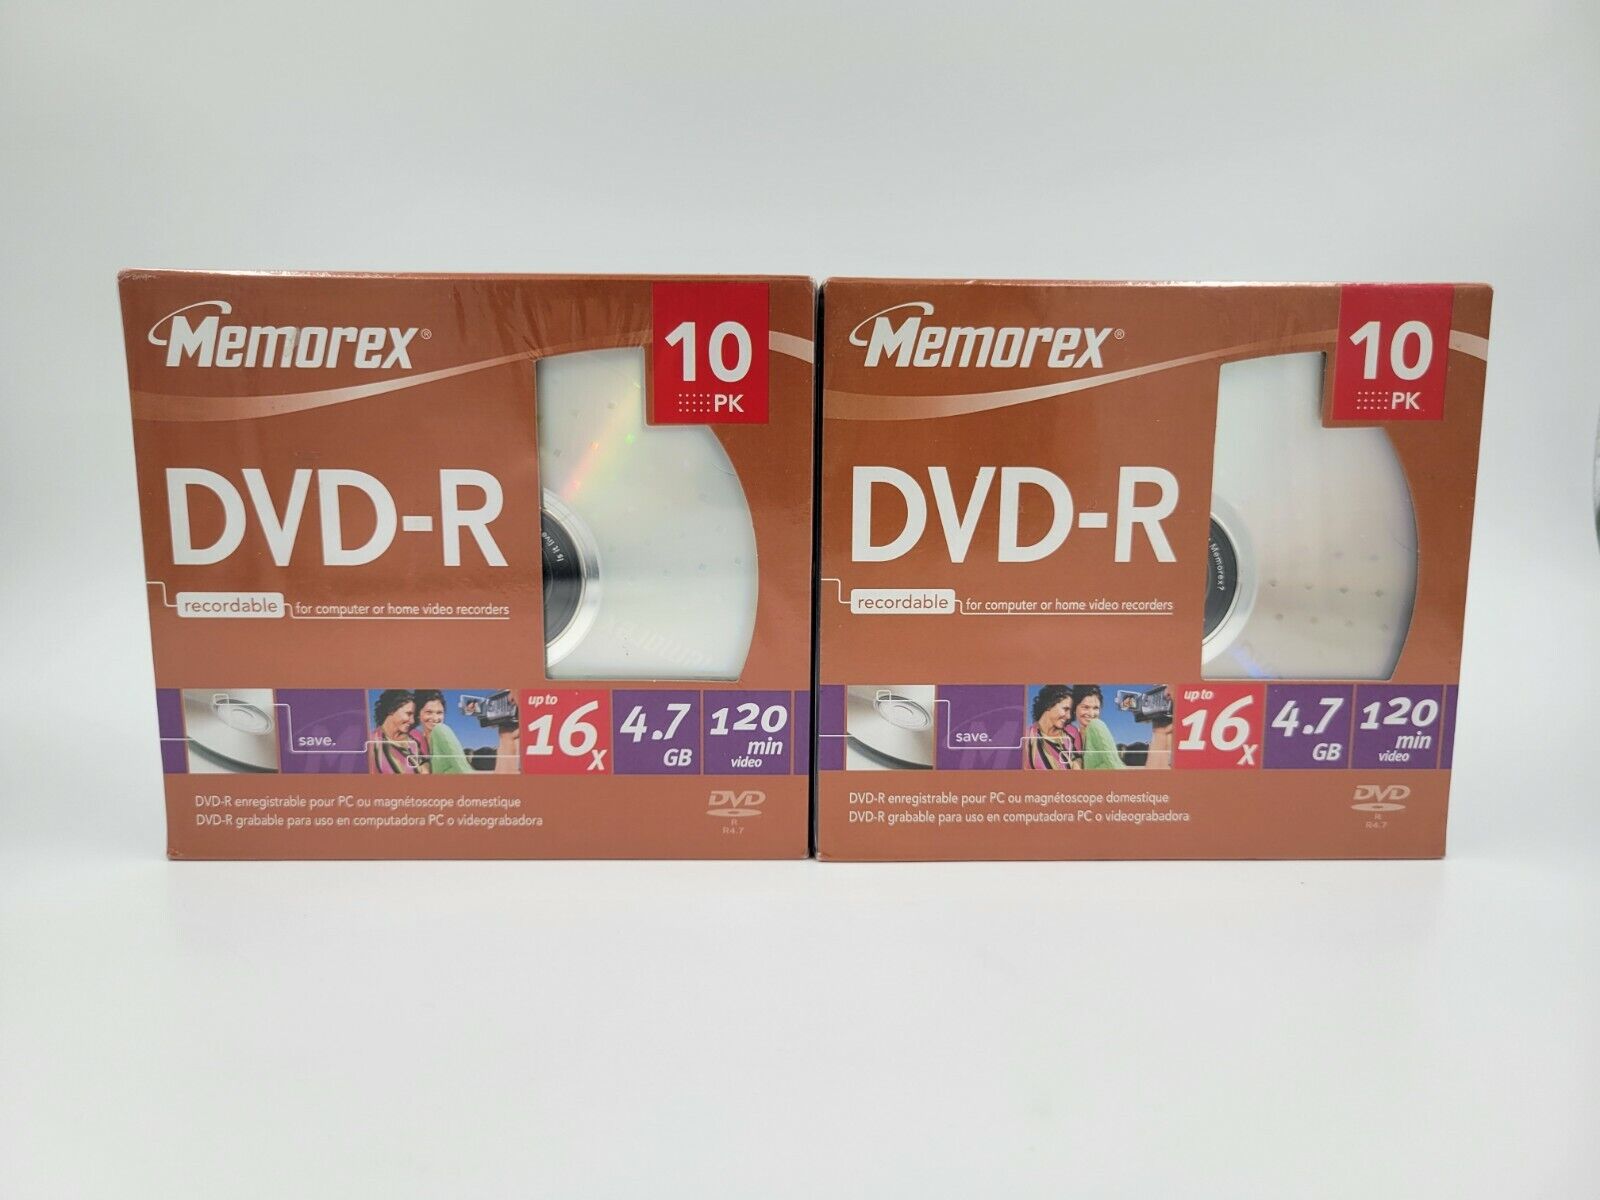 Memorex DVD-R 10pk 16x 4.7GB 120min Recordable New Media Discs Sealed Lot Of 2